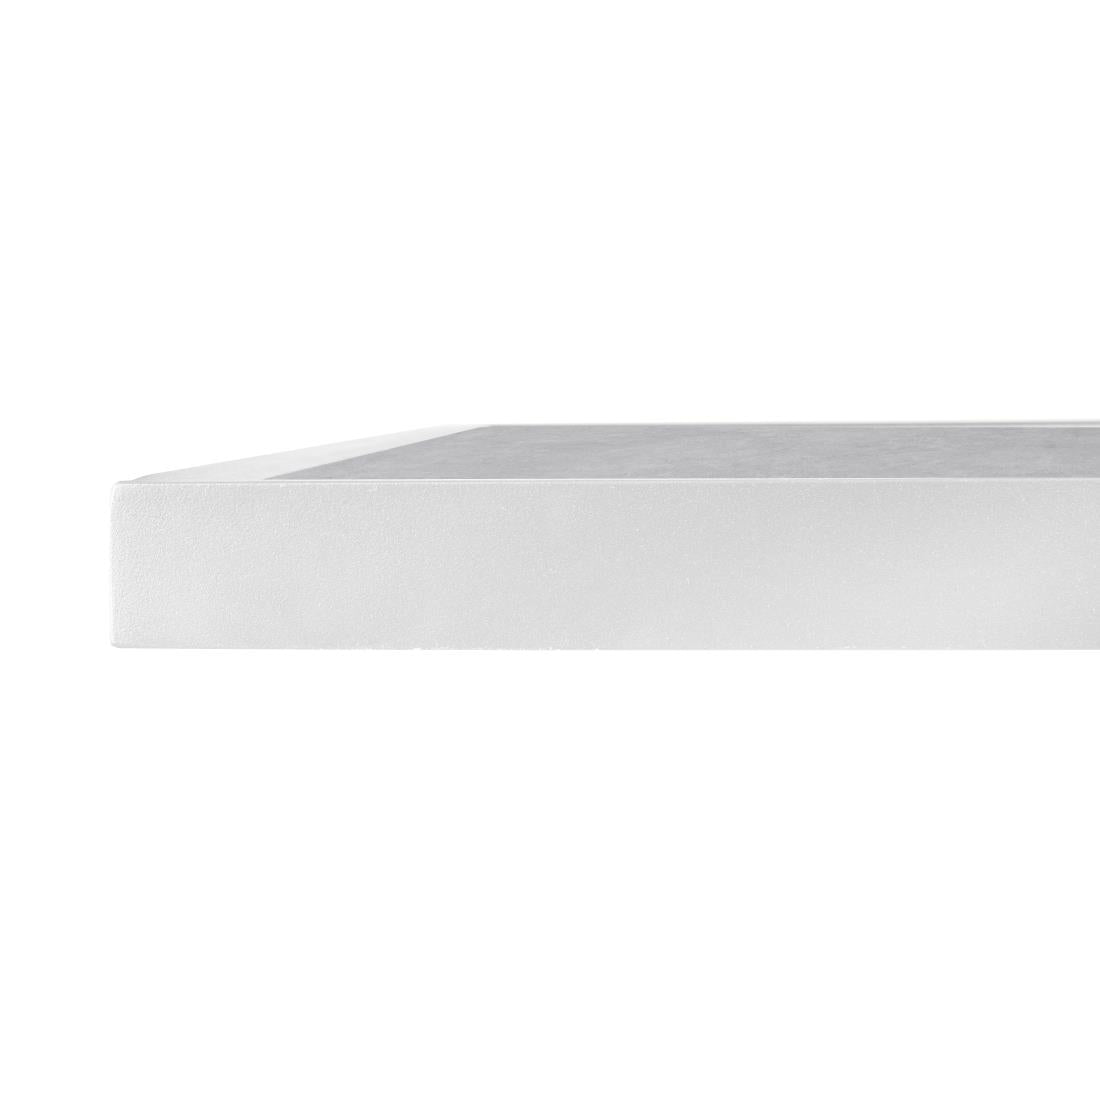 FU514 Bolero Light Grey Stone Effect Outdoor Tempered Glass Table Top White Trim 700mm